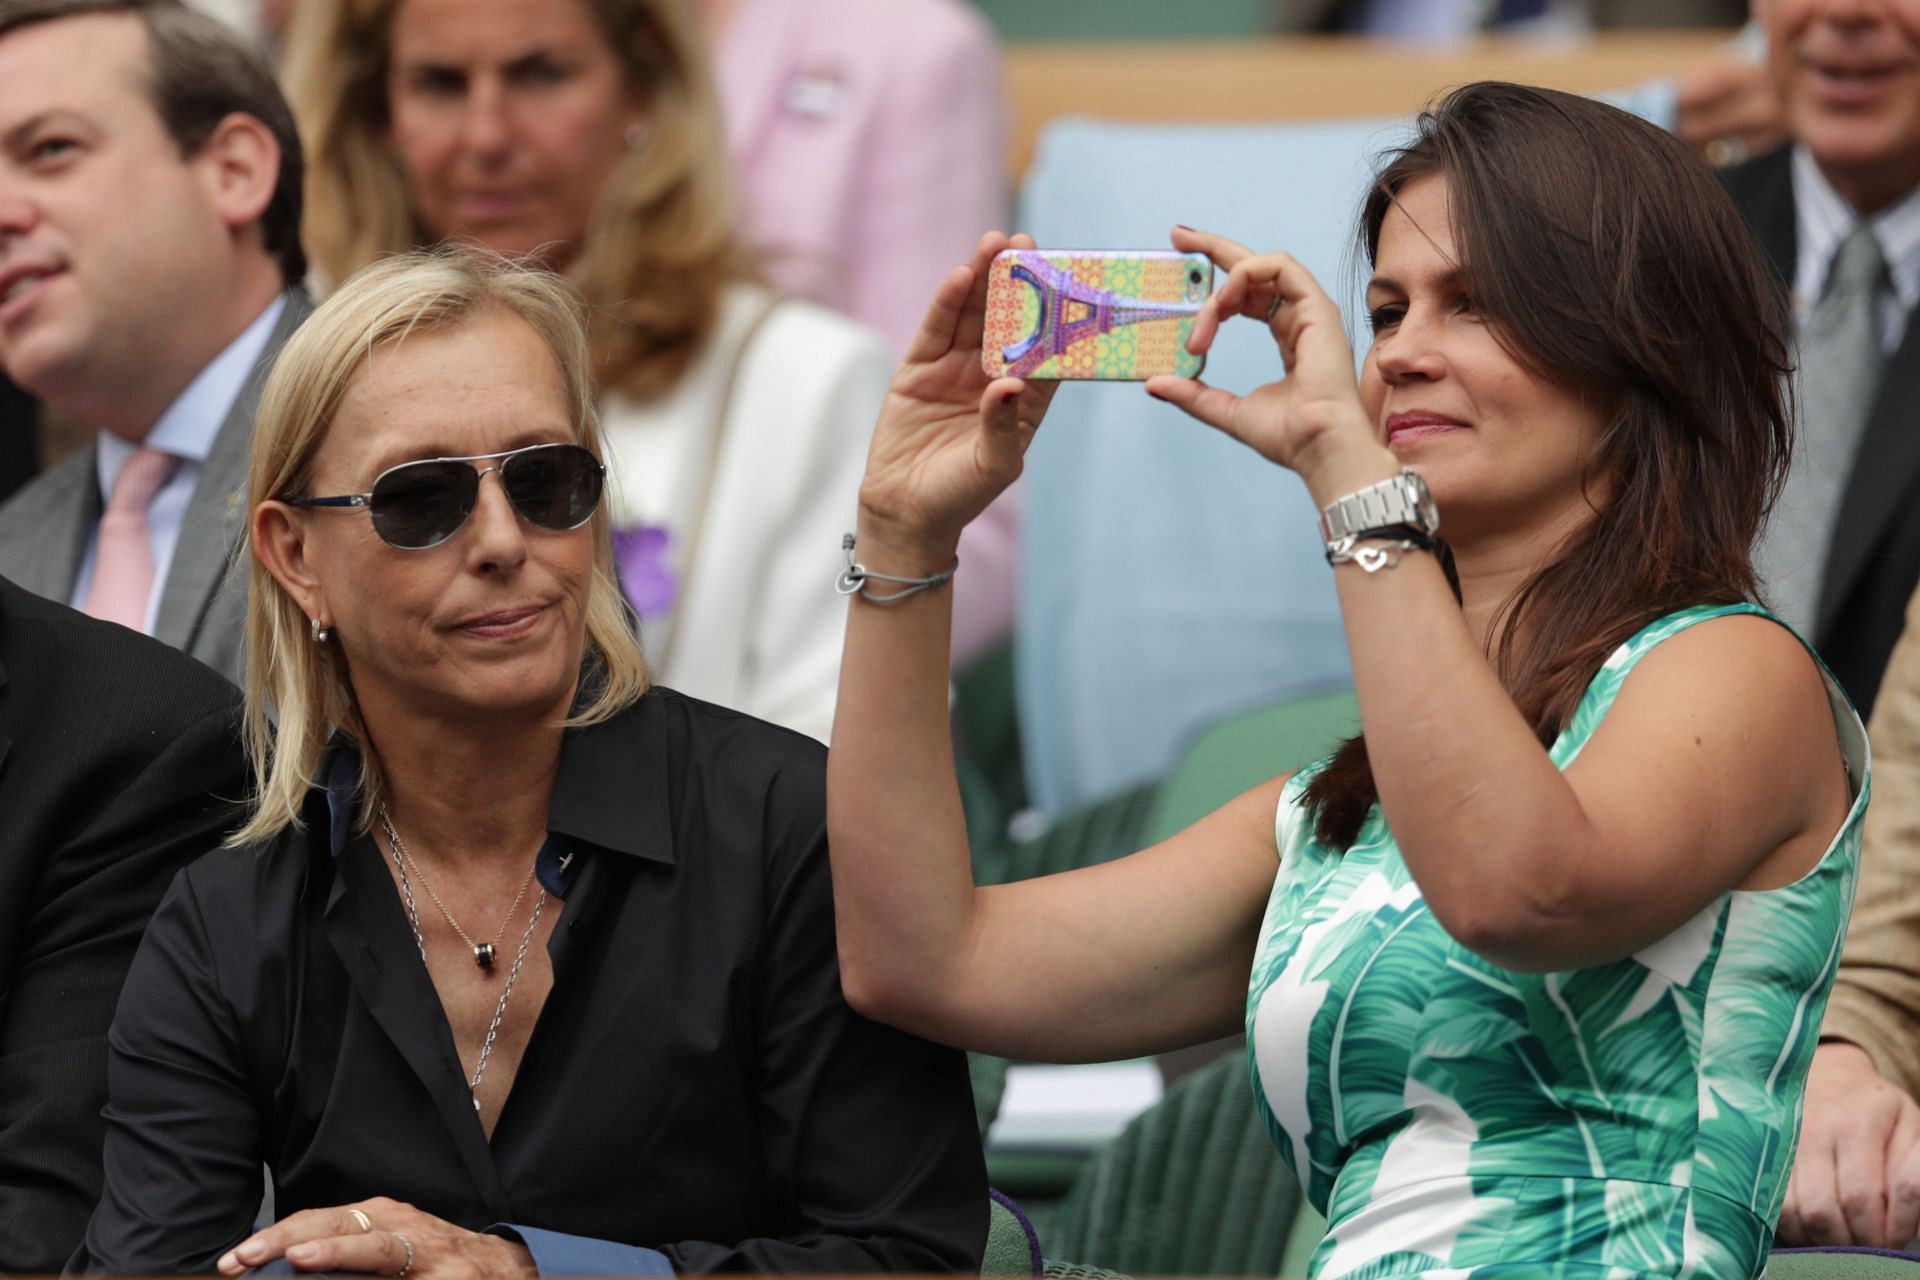 Martina Navratilova and her wife Julia Lemigova pictured at the 2016 Wimbledon Championships